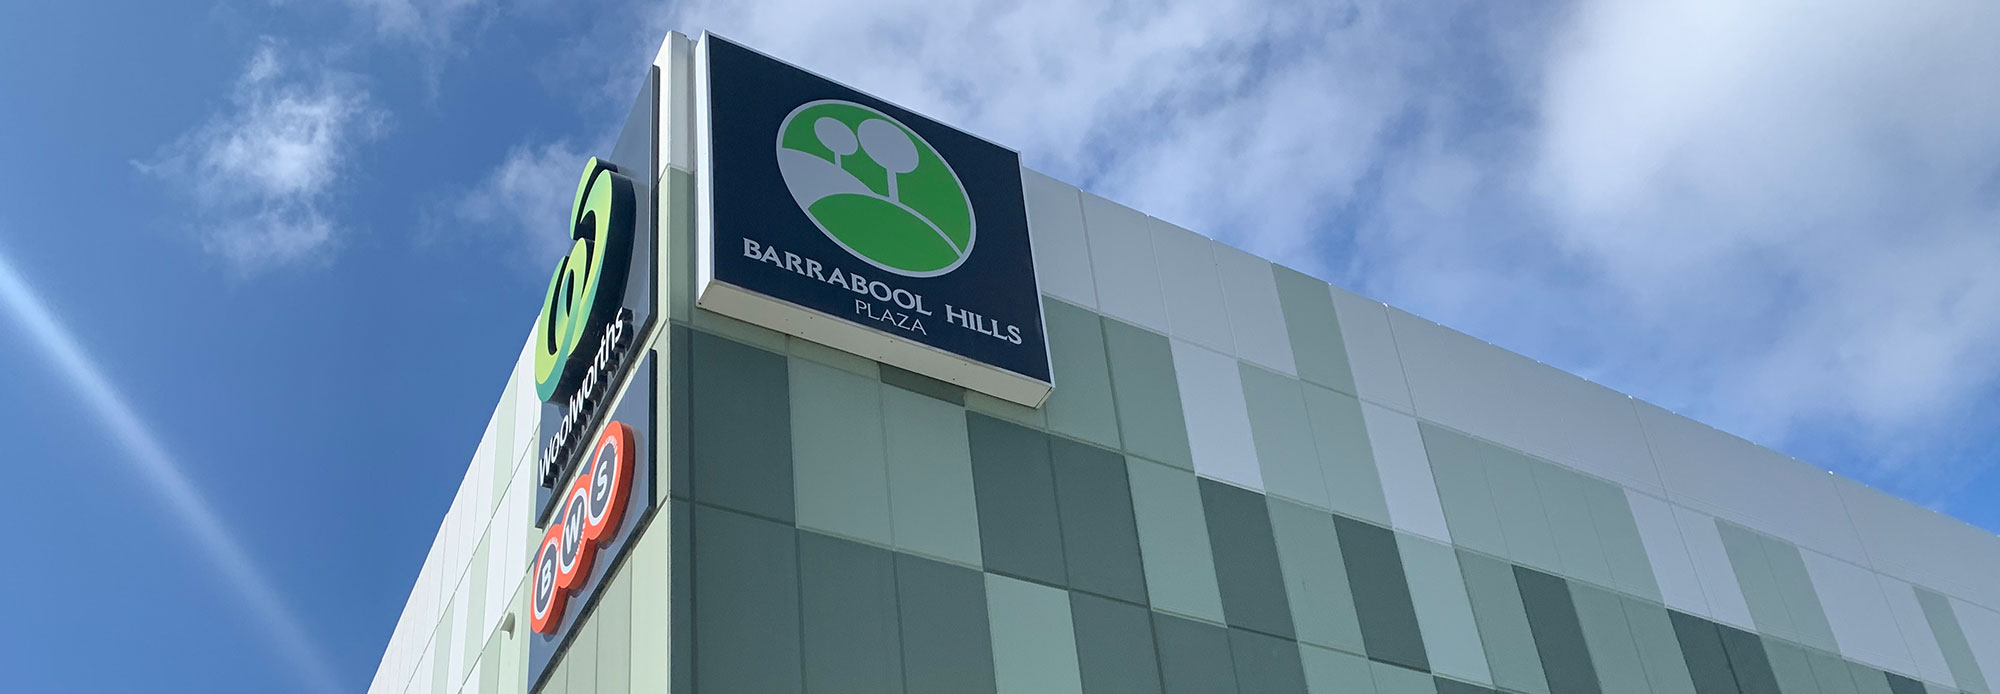 Barrabool Hills Plaza centre information